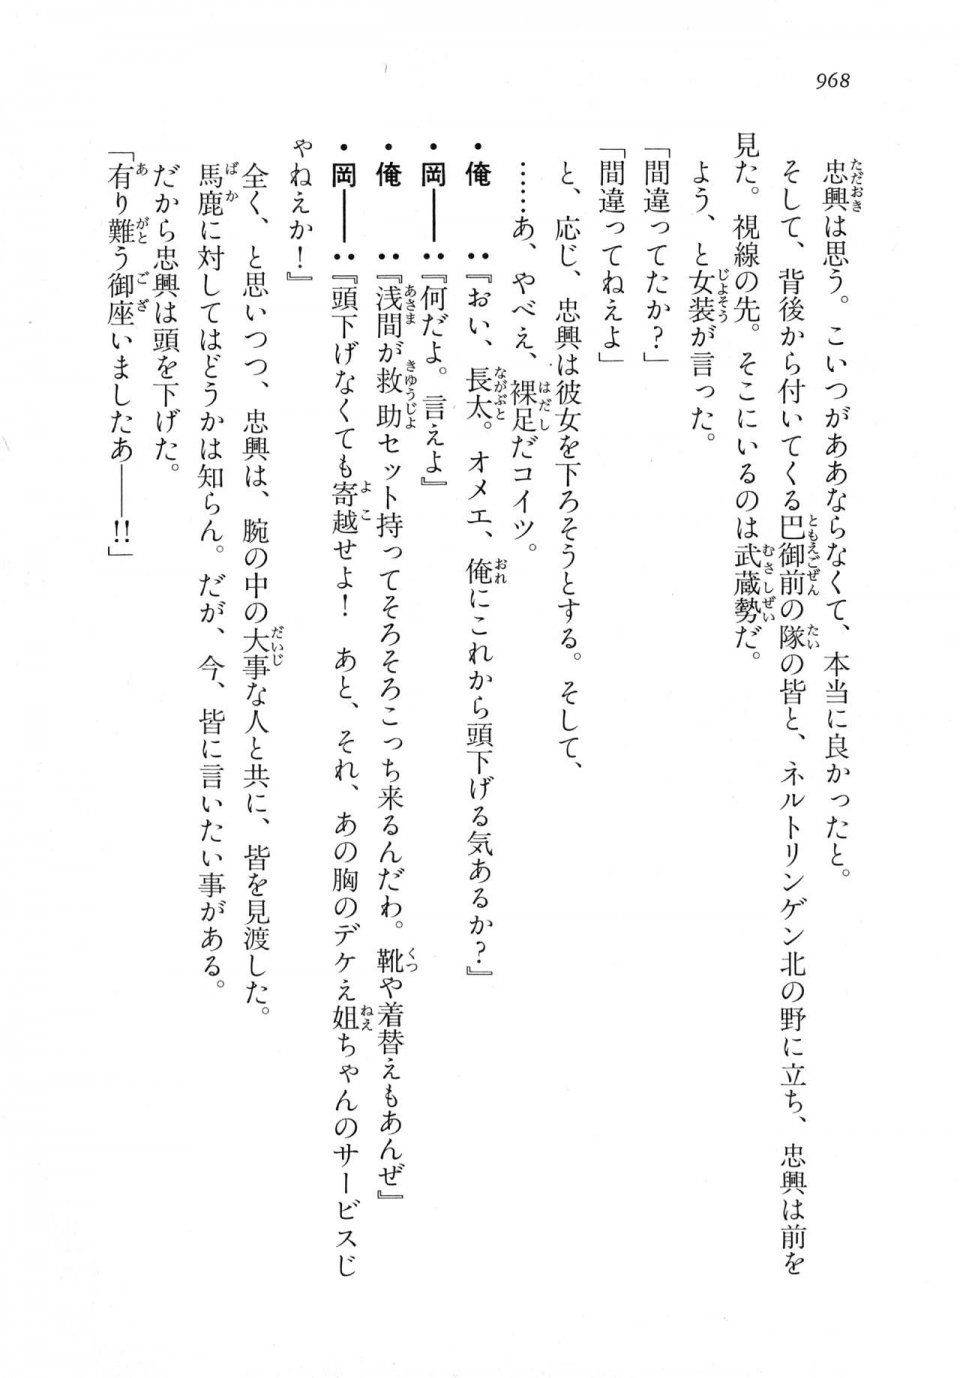 Kyoukai Senjou no Horizon LN Vol 18(7C) Part 2 - Photo #408